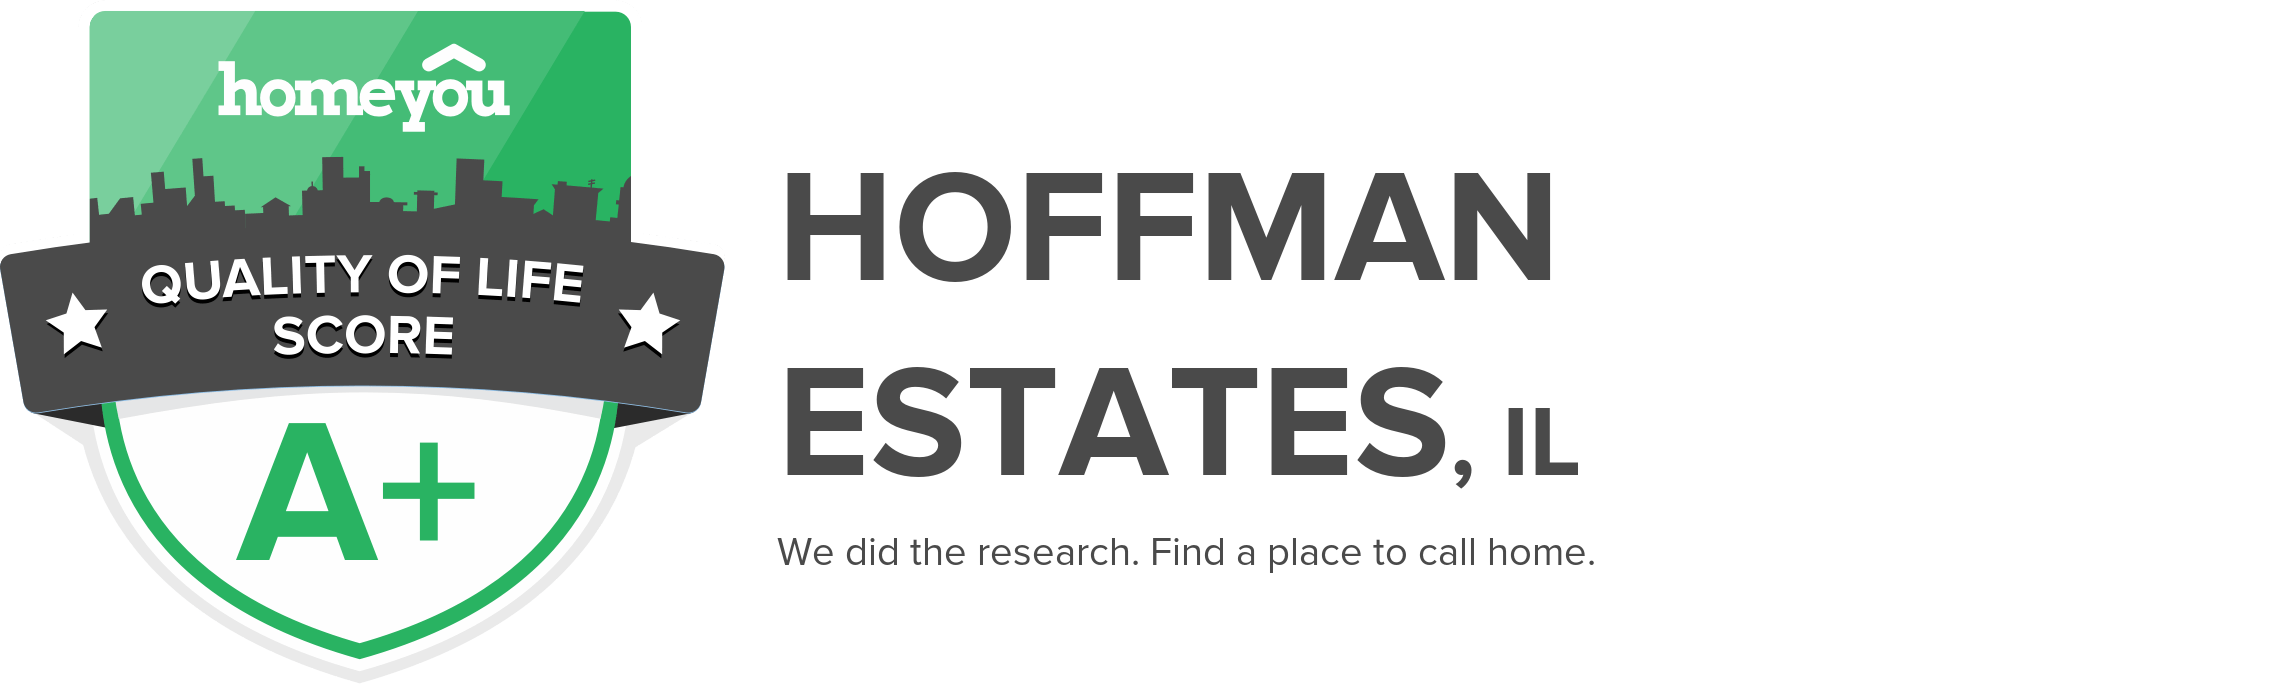 Hoffman Estates, IL